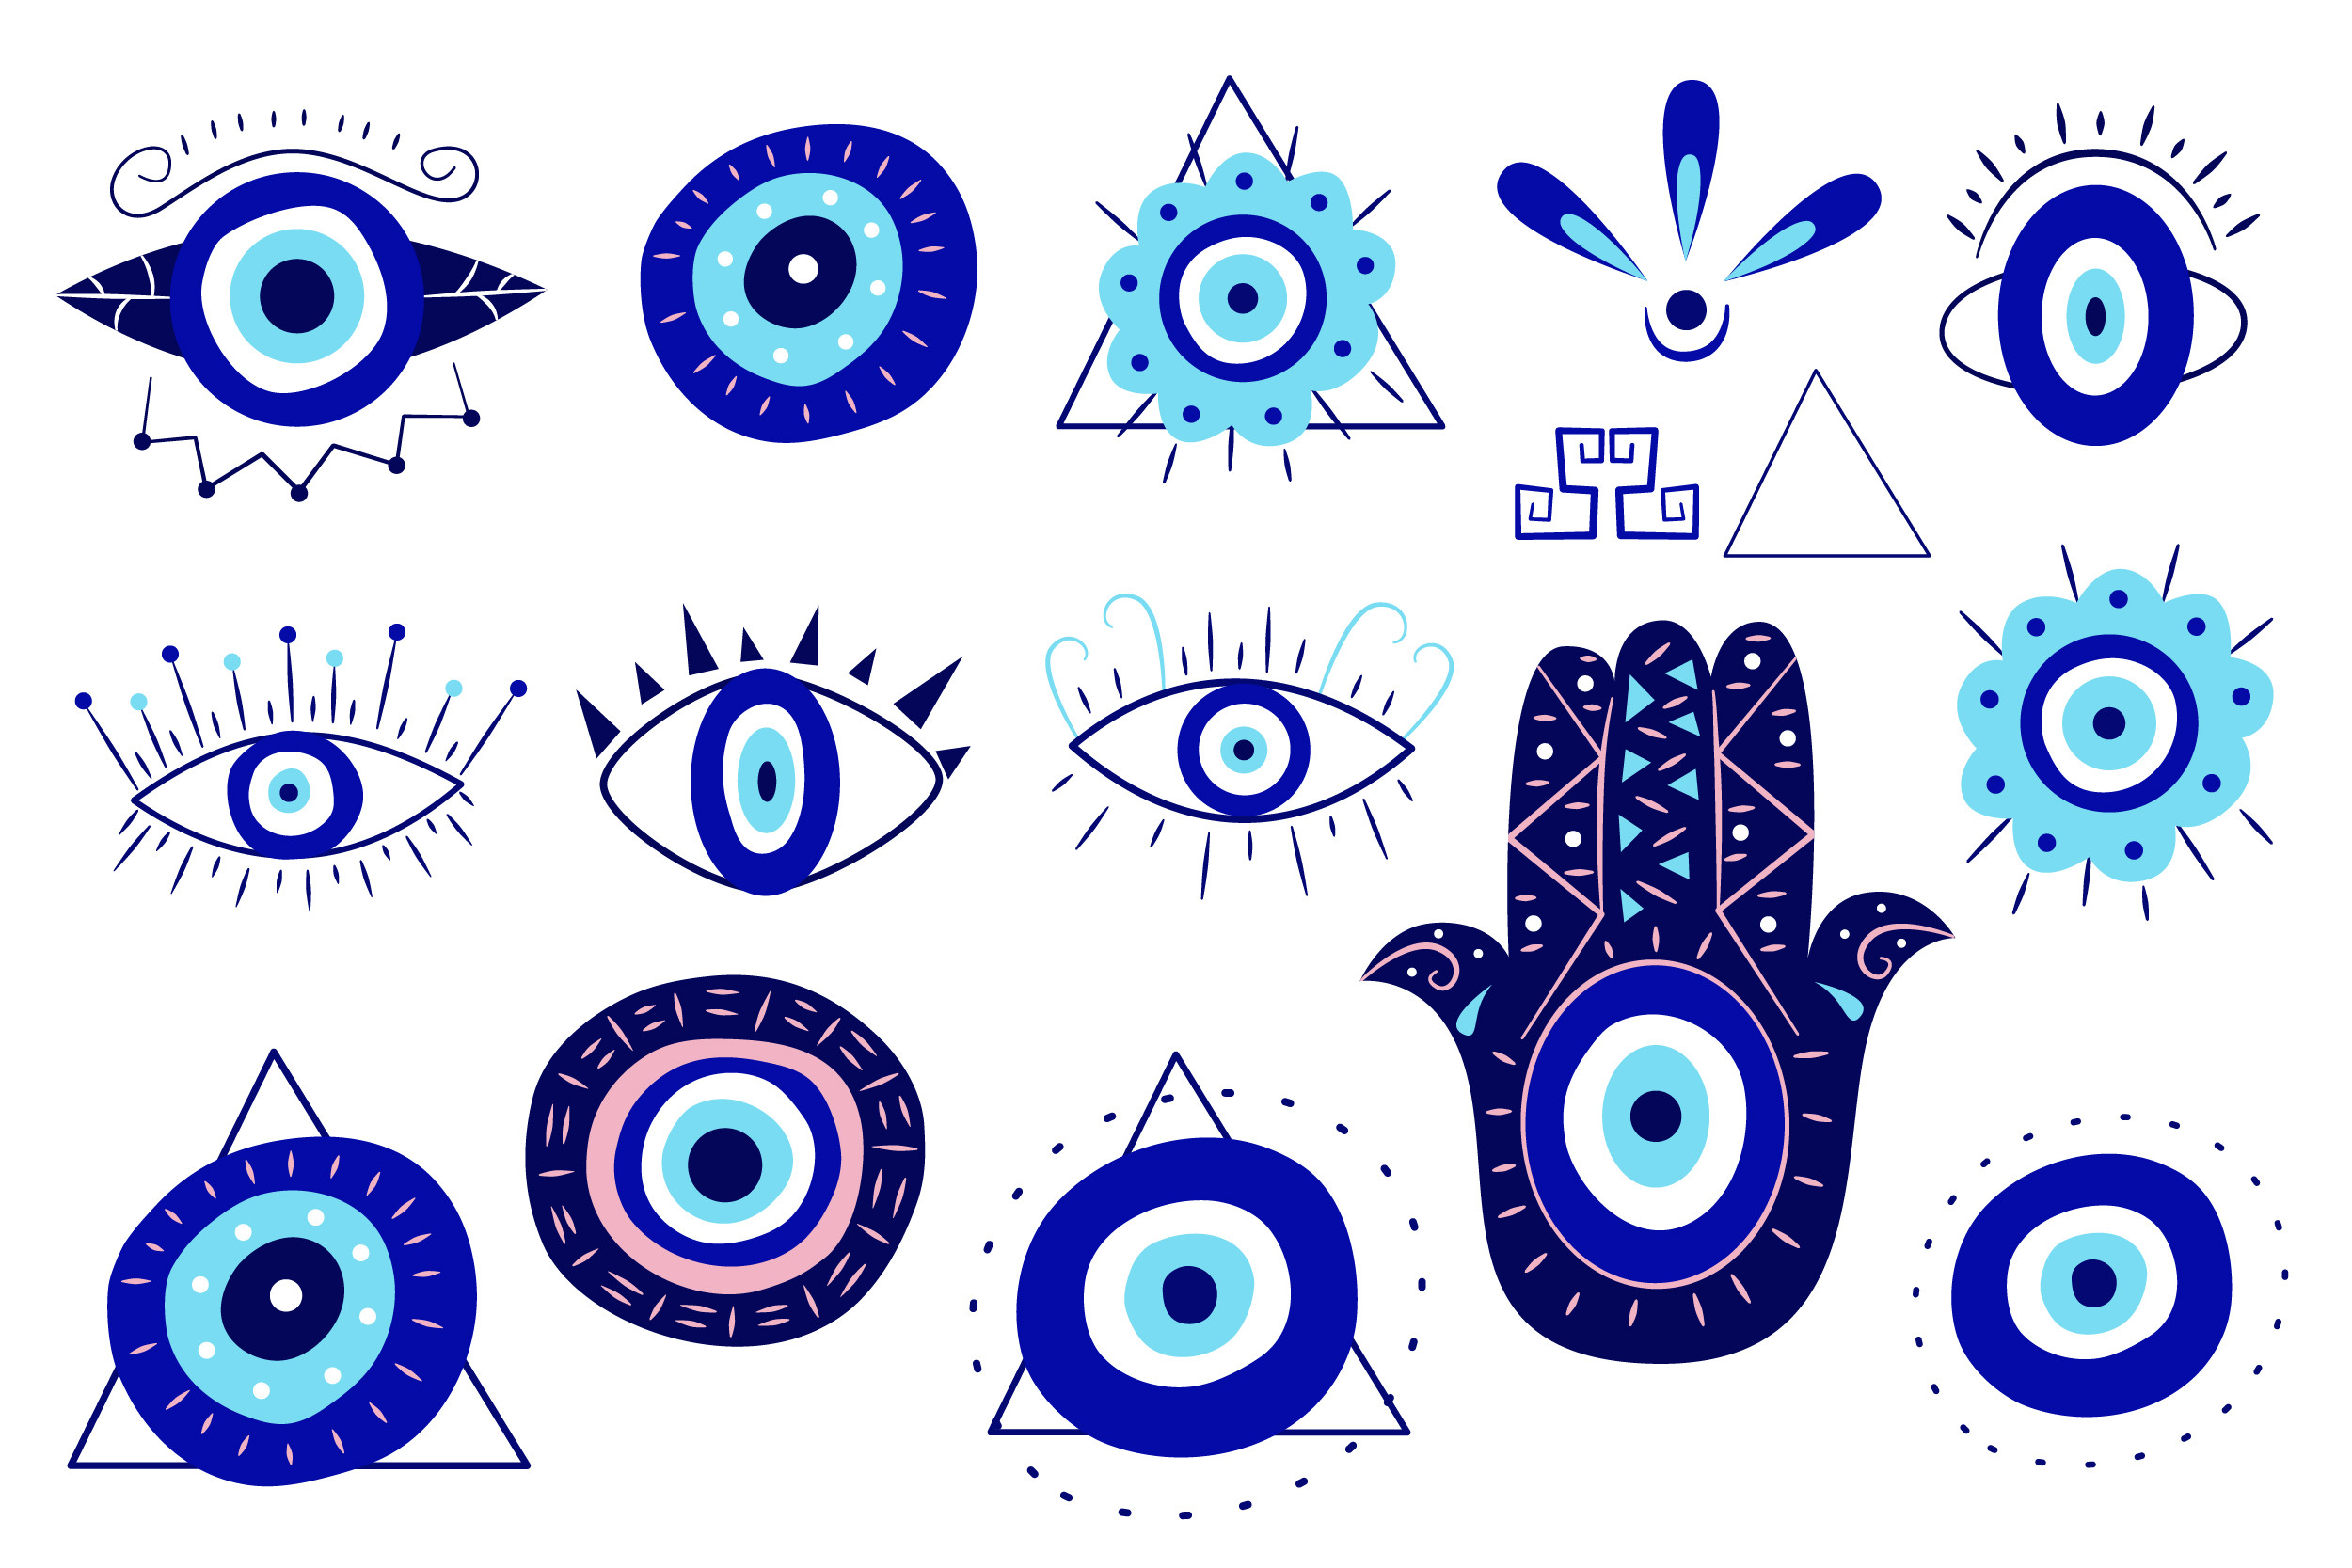 Different digital artistic illustrations of evil blue eye